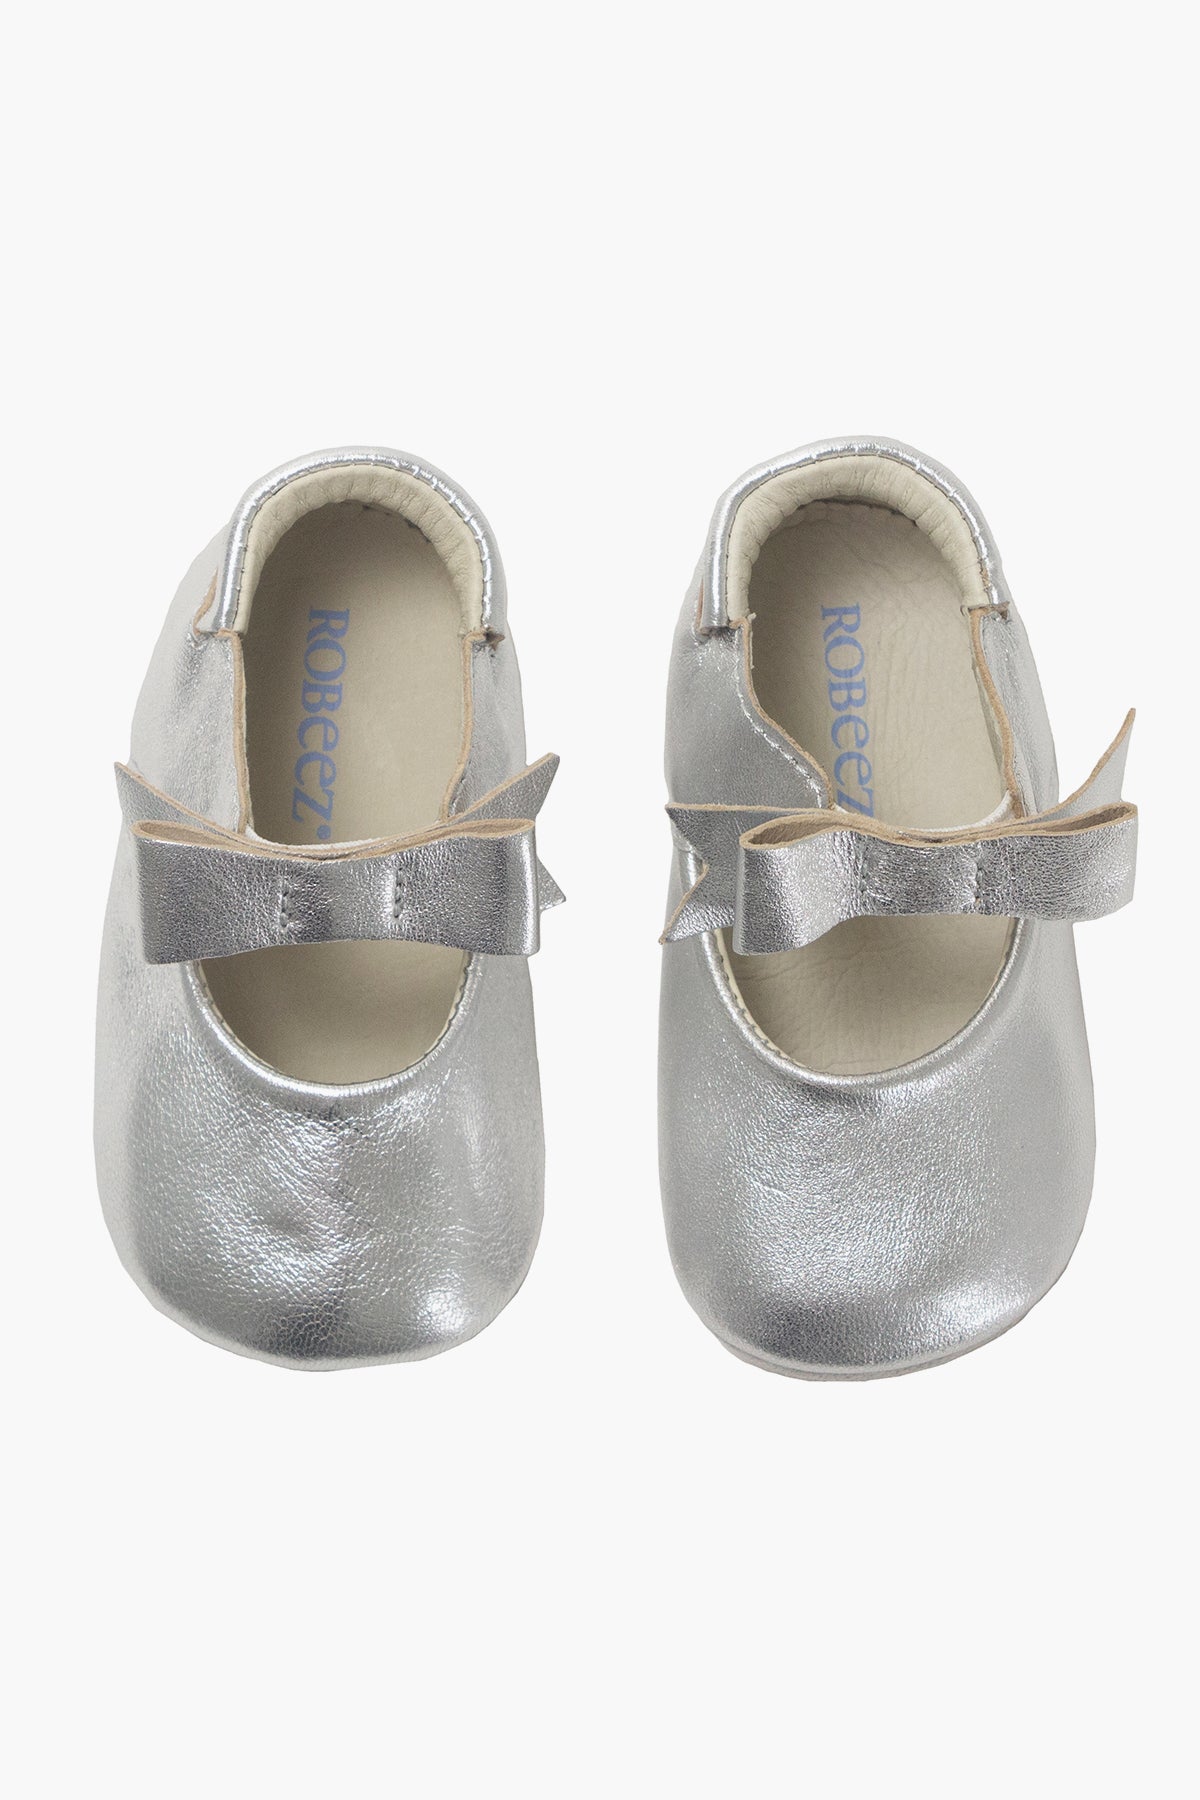 Robeez Sofia Baby Girls Shoes - Silver Metallic – Mini Ruby